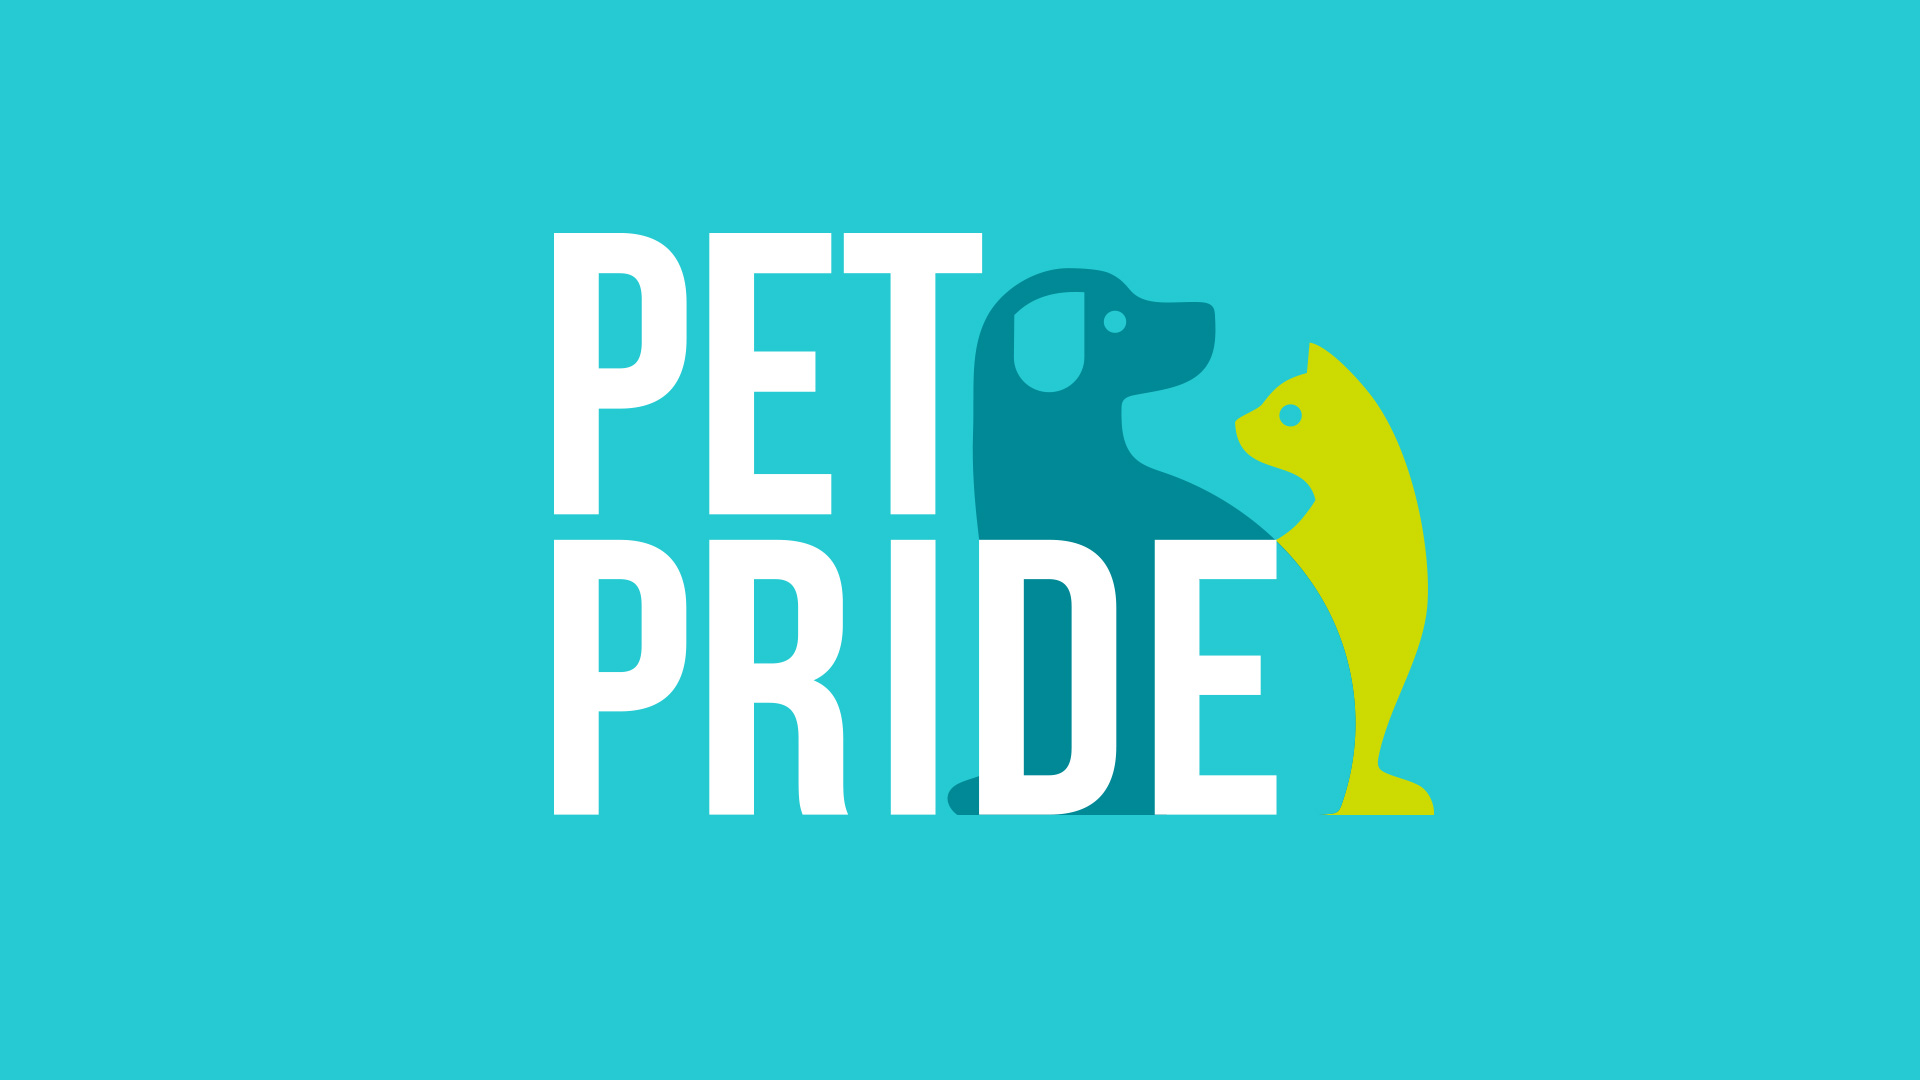 Pet pride для кошек. Pet Pride. Pet Pride корм хорошее качество?. Pet Pride отзывы.